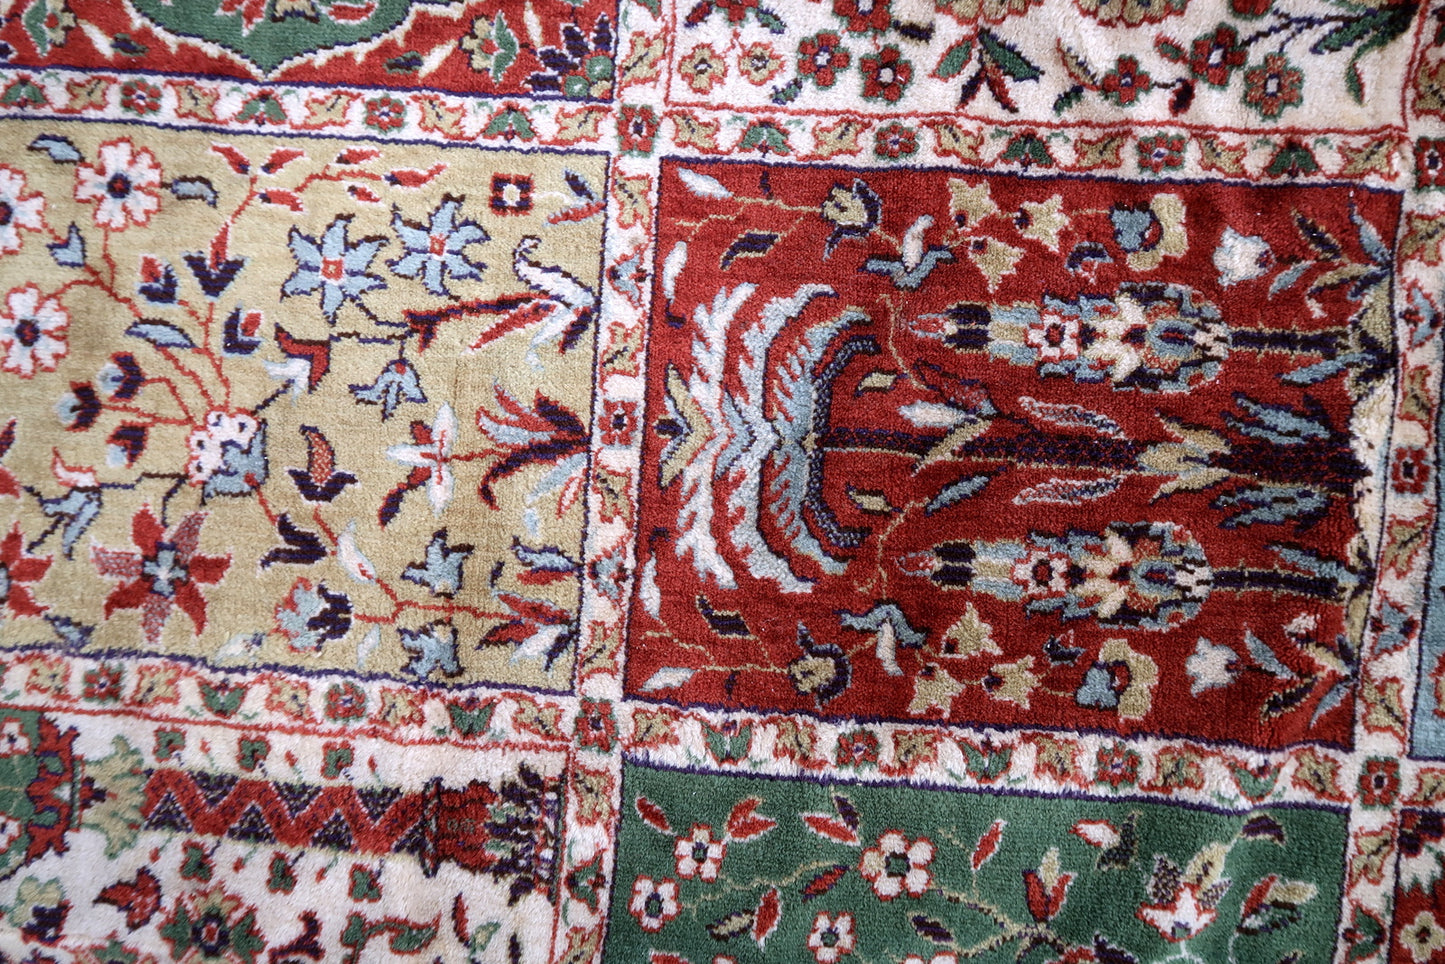 Vintage Persian Qum style rug 1970s